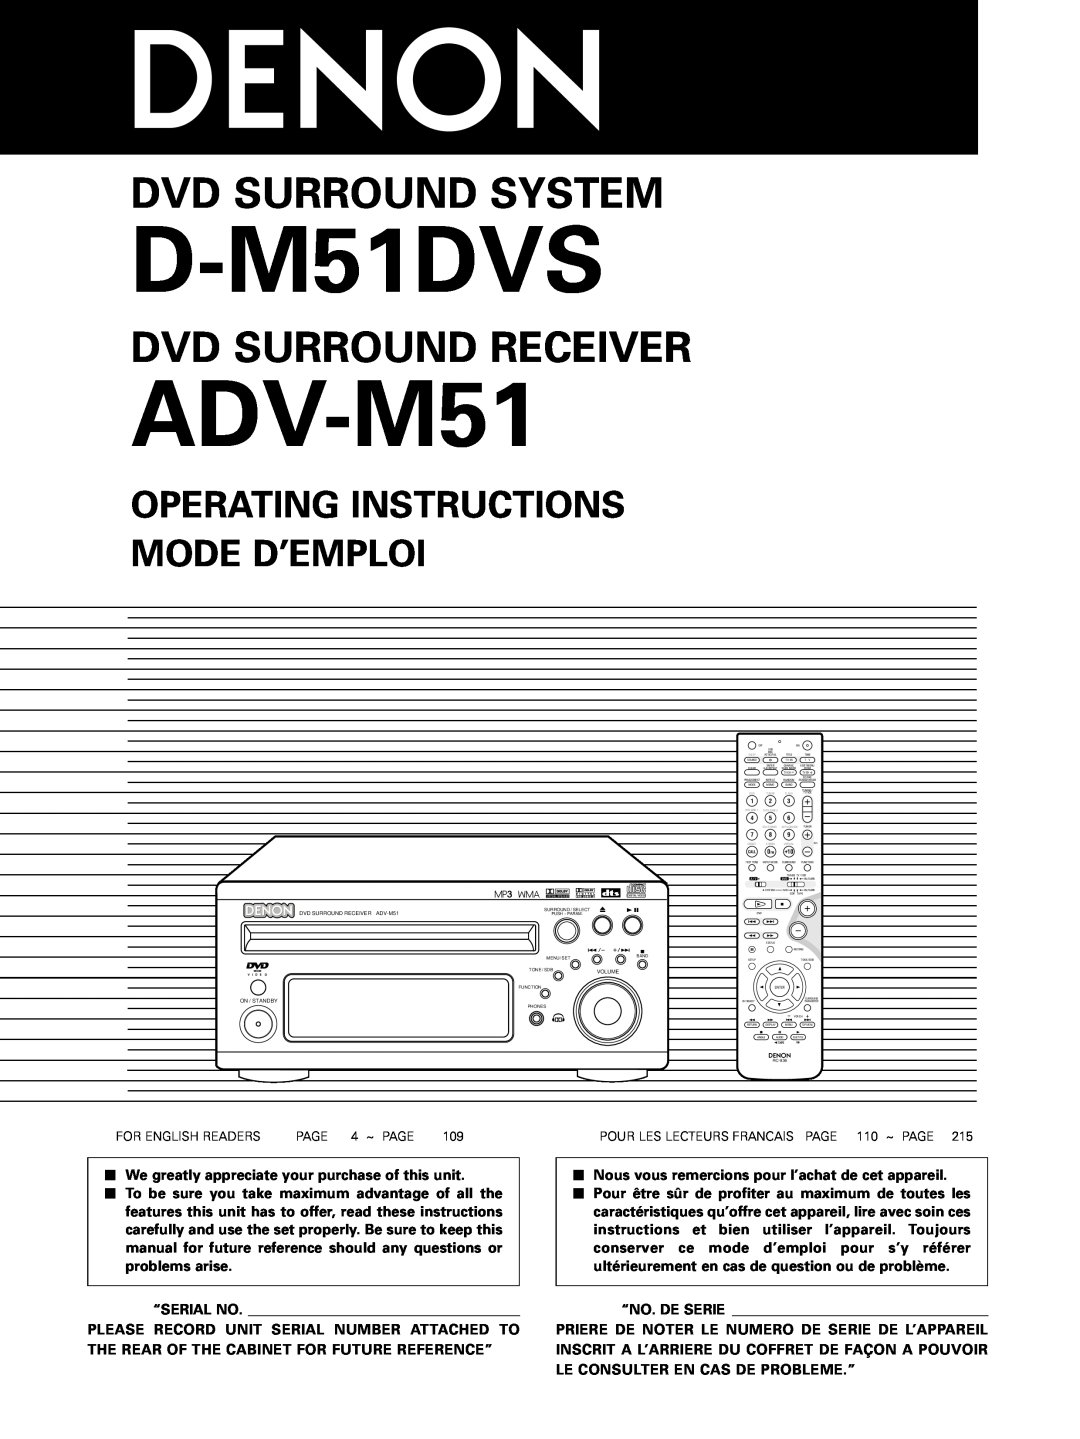 Denon ADV-M51 manual Operating Instructions Mode D’Emploi, D-M51DVS, Dvd Surround System, Dvd Surround Receiver 